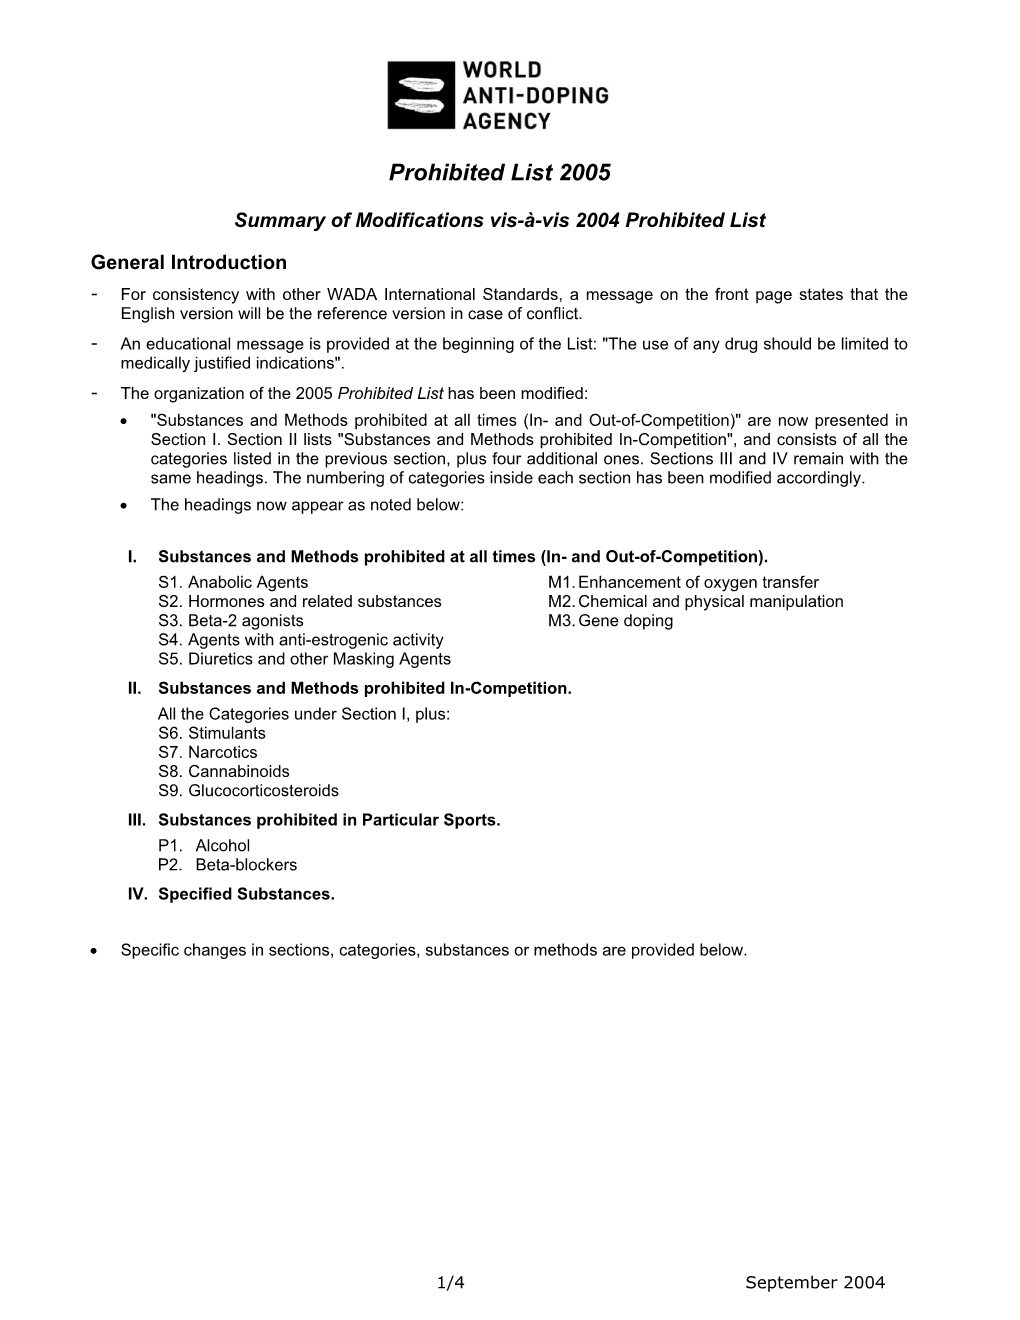 WADA Prohibited List, 2004